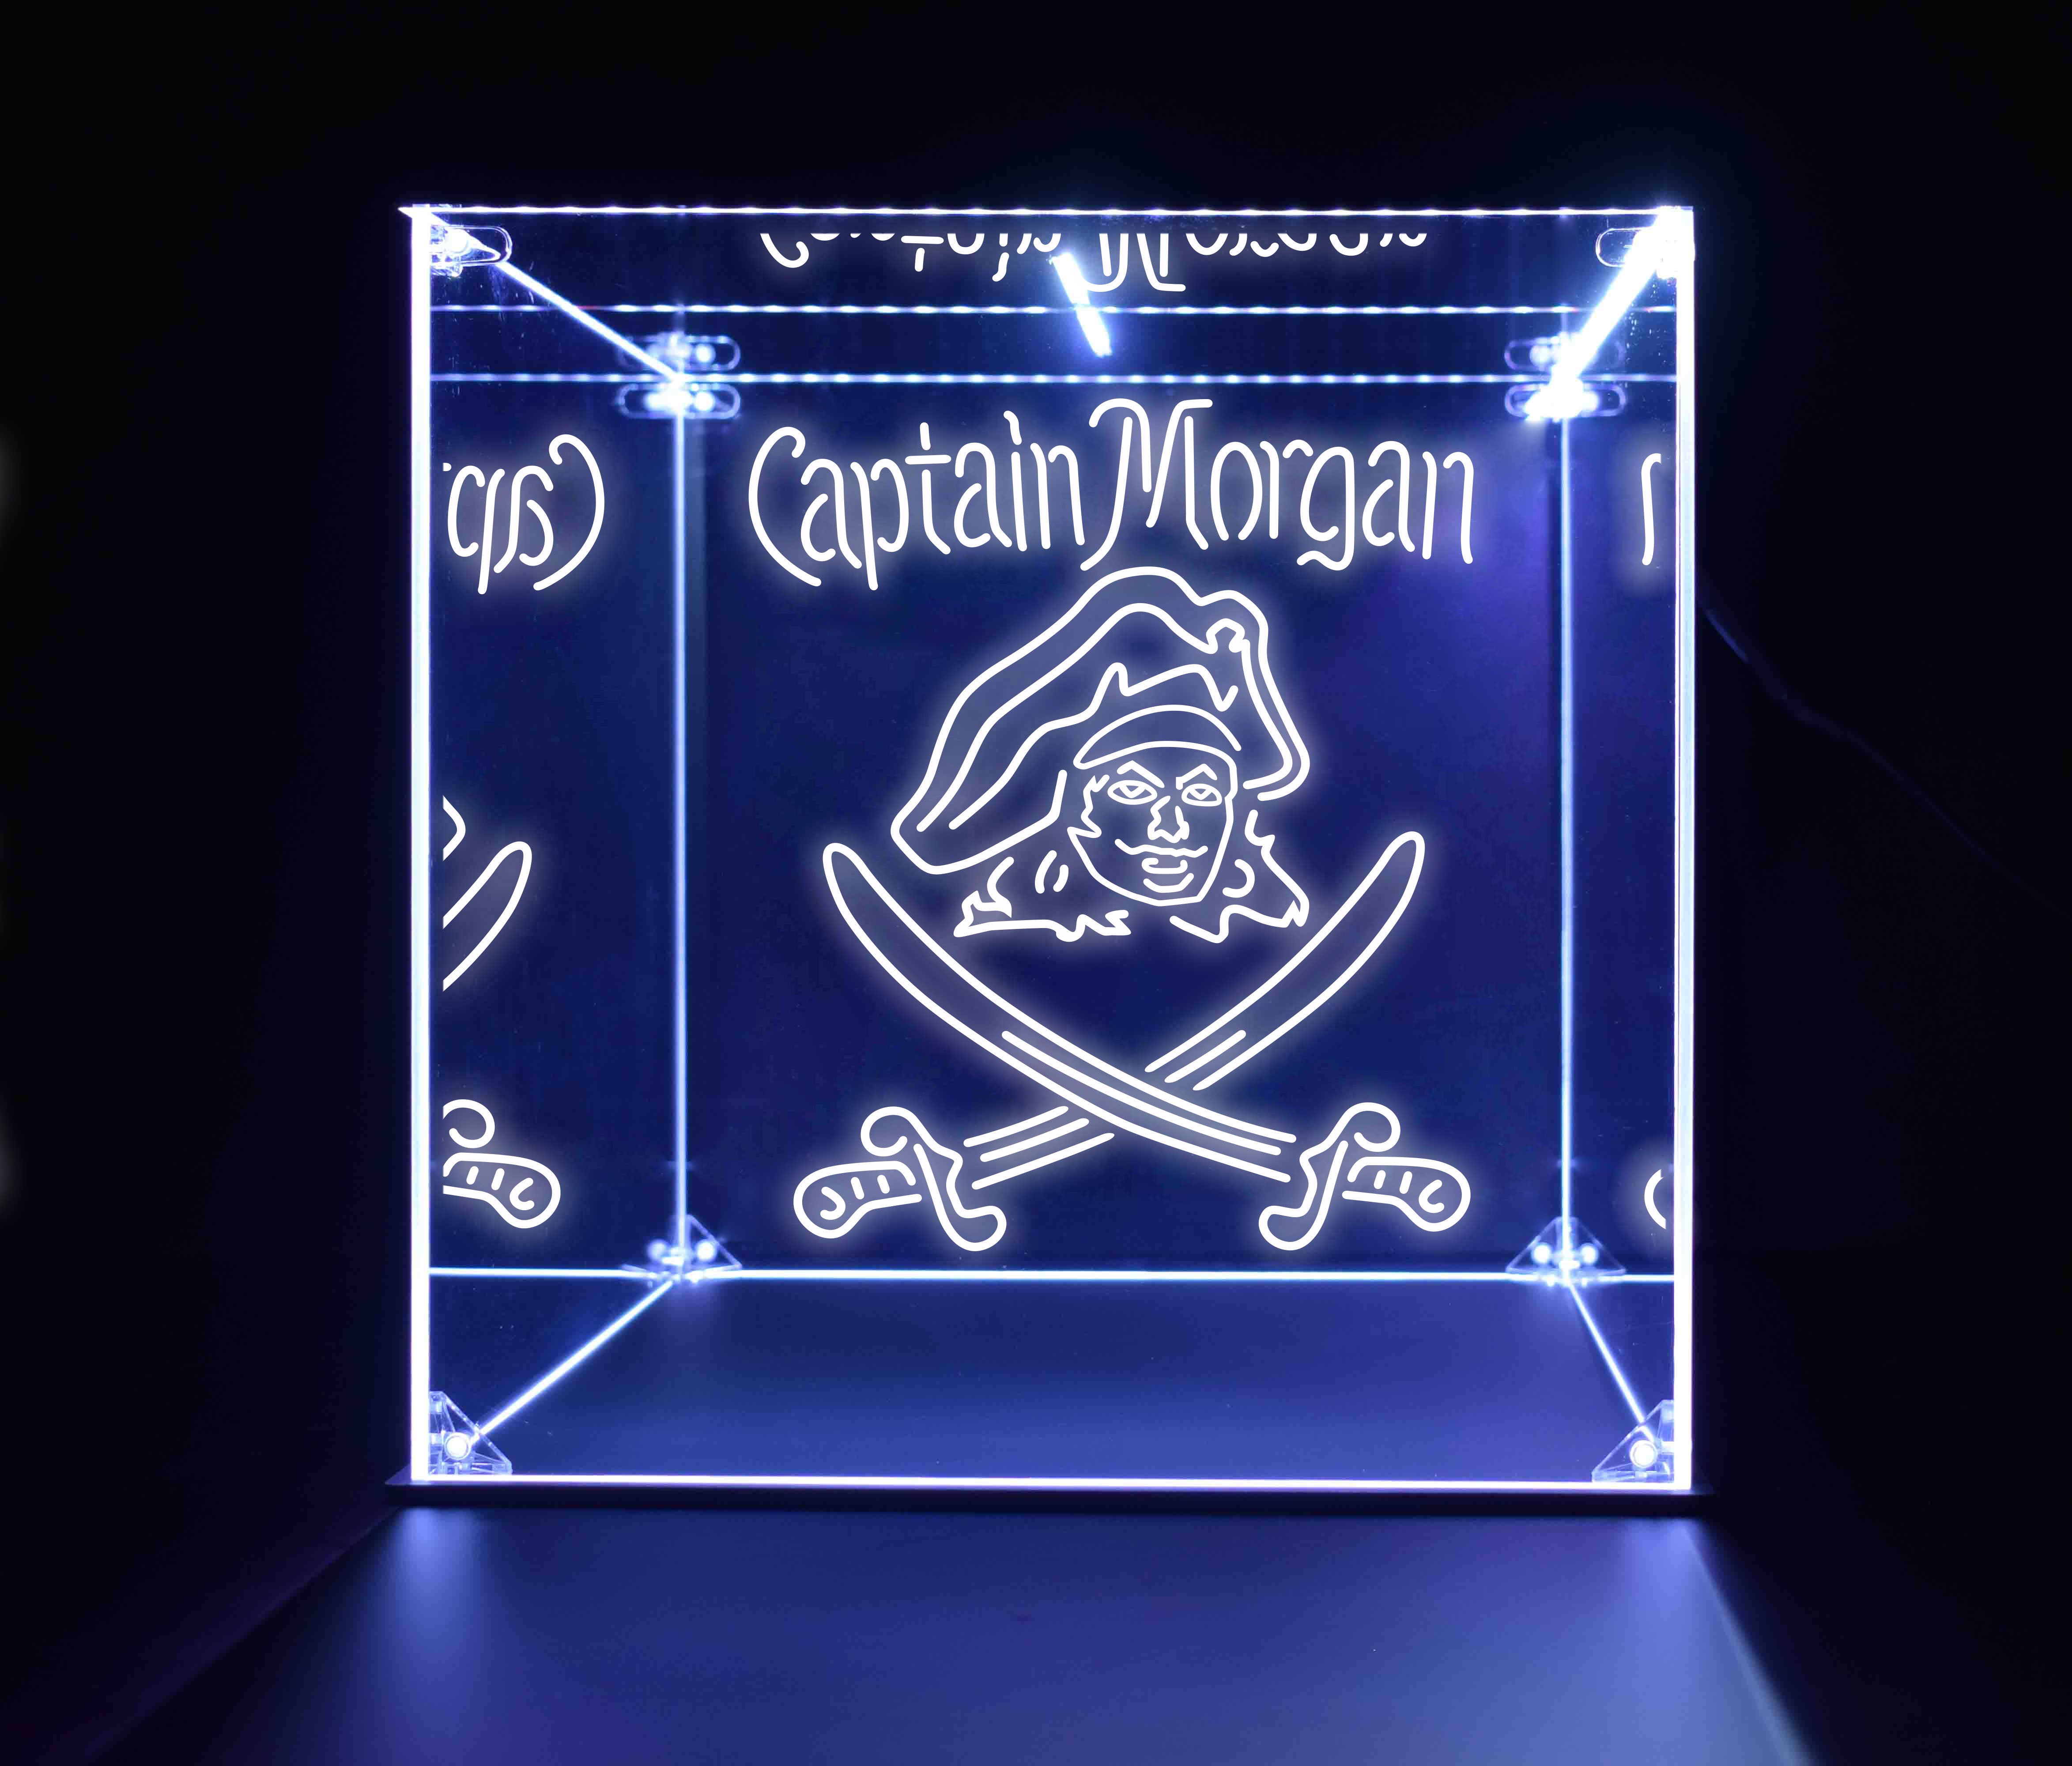 Wine, Champagne, Liquor, Beverage Bottle LED Display Case, Captain Morgan Collection